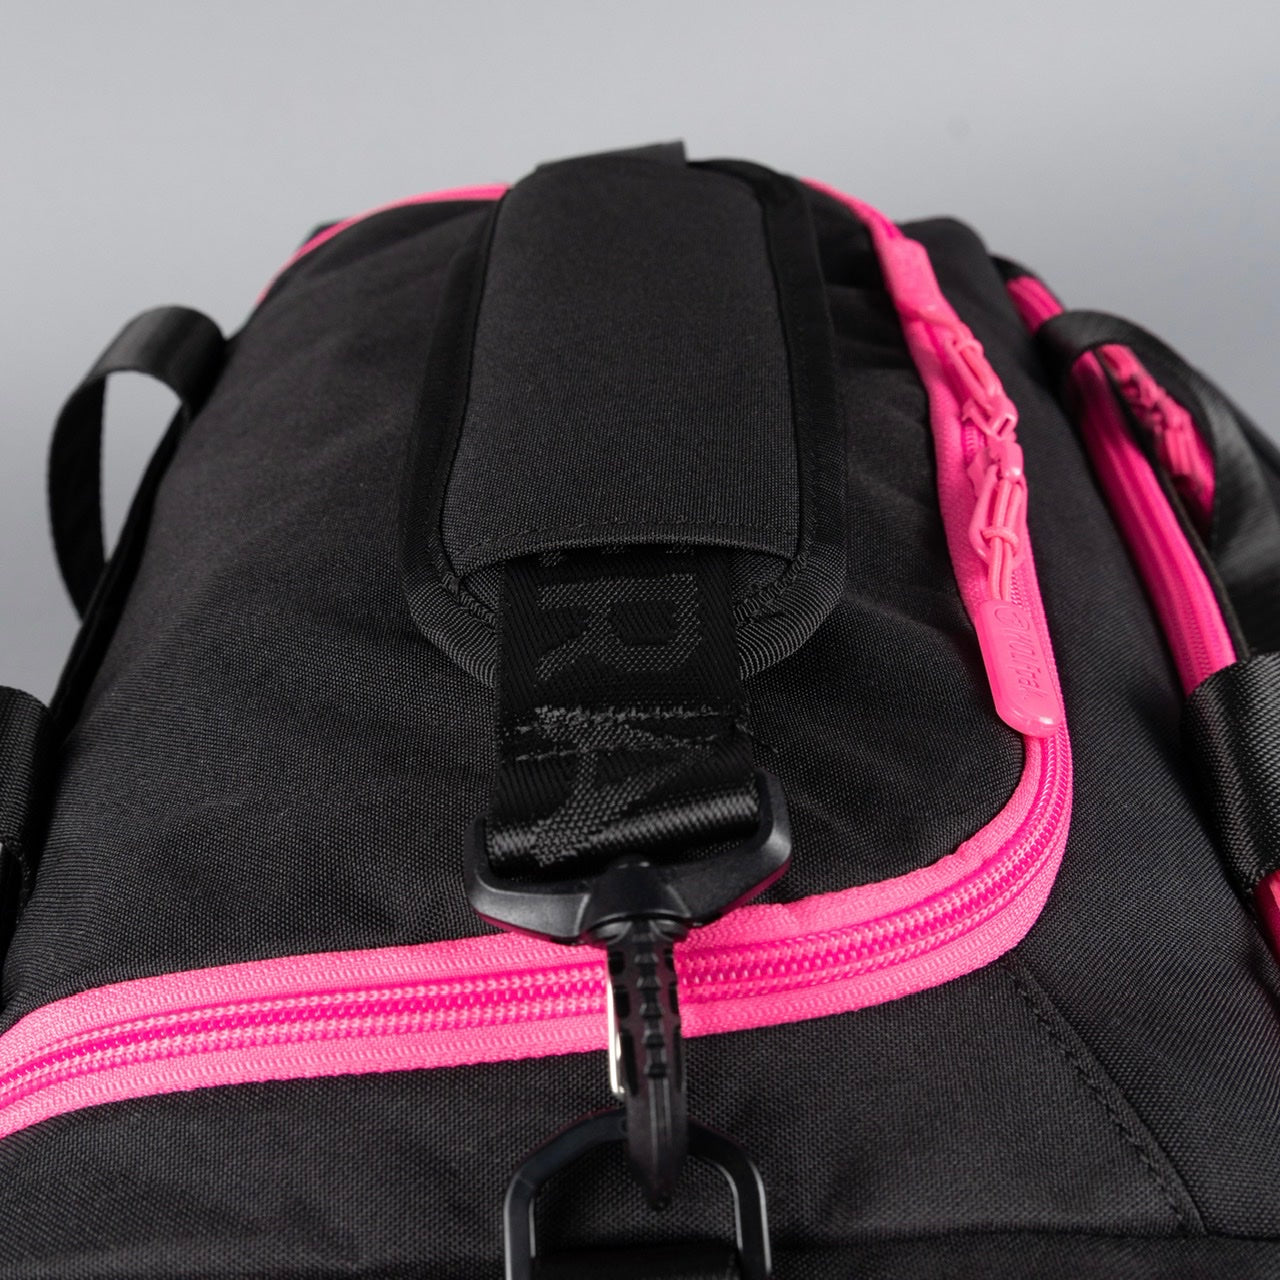 20L Mini Duffle Bag Black Neon Pink